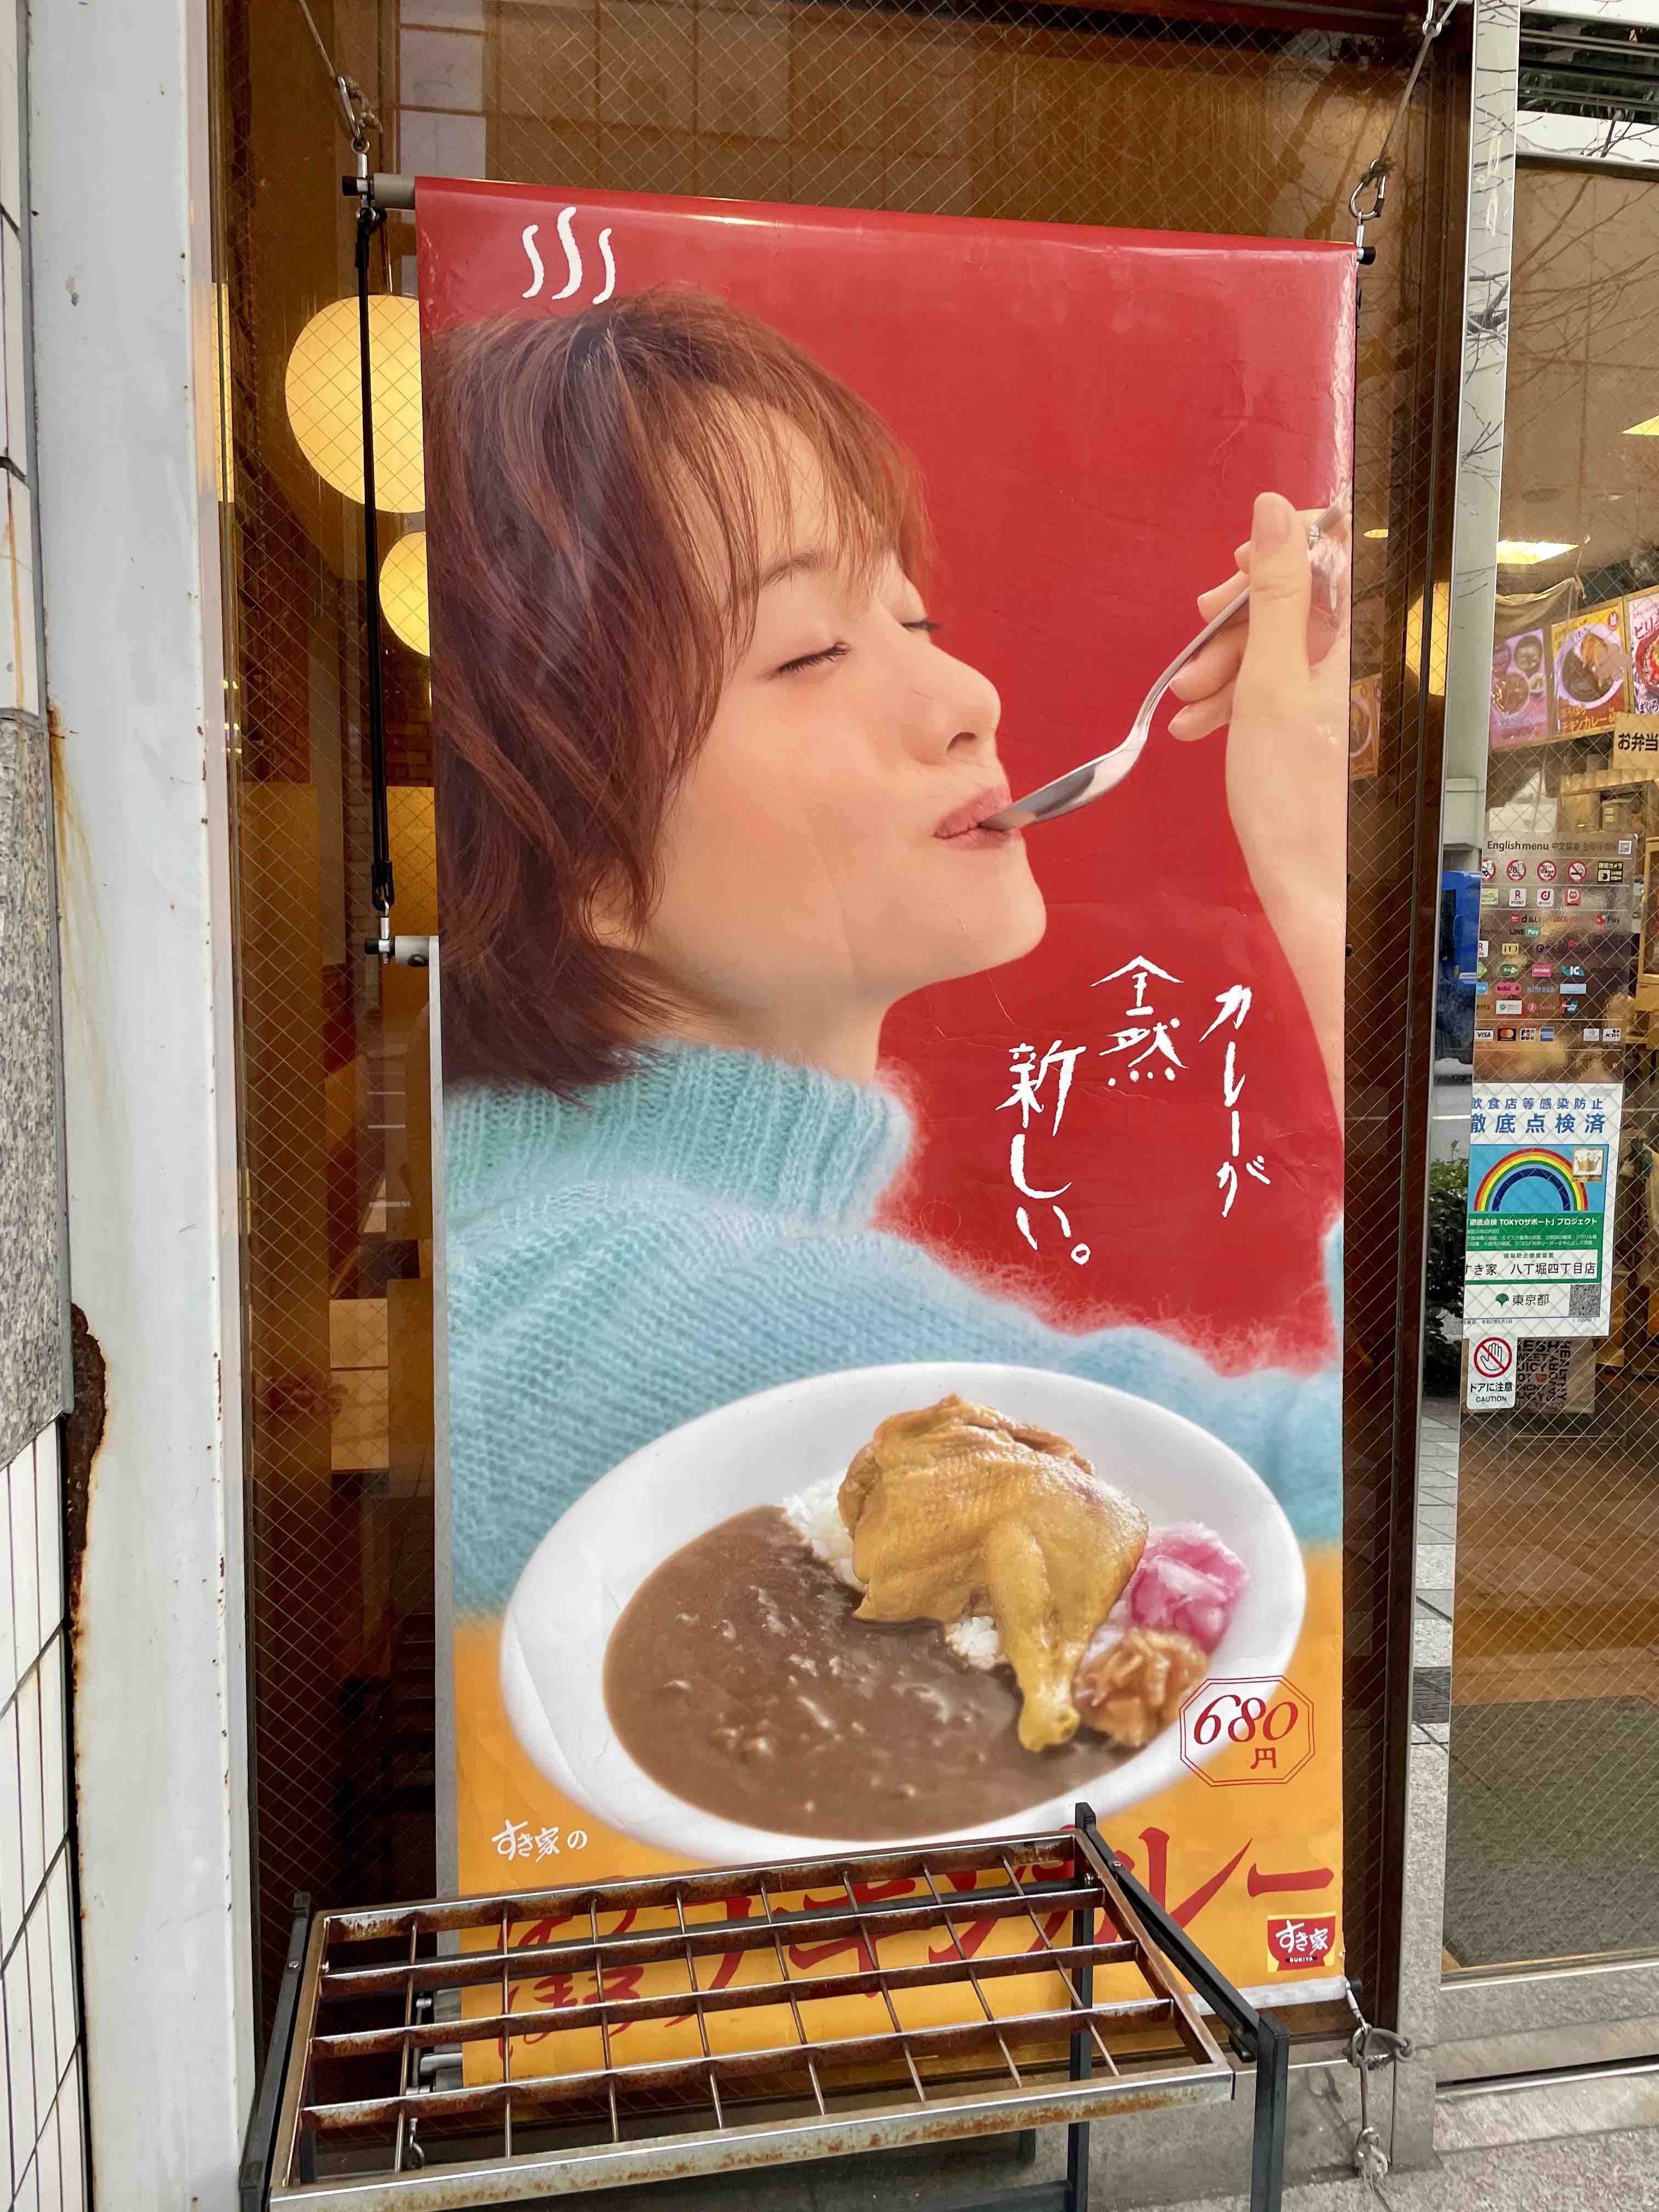 Sukiya restaurant advertising their curry with a woman